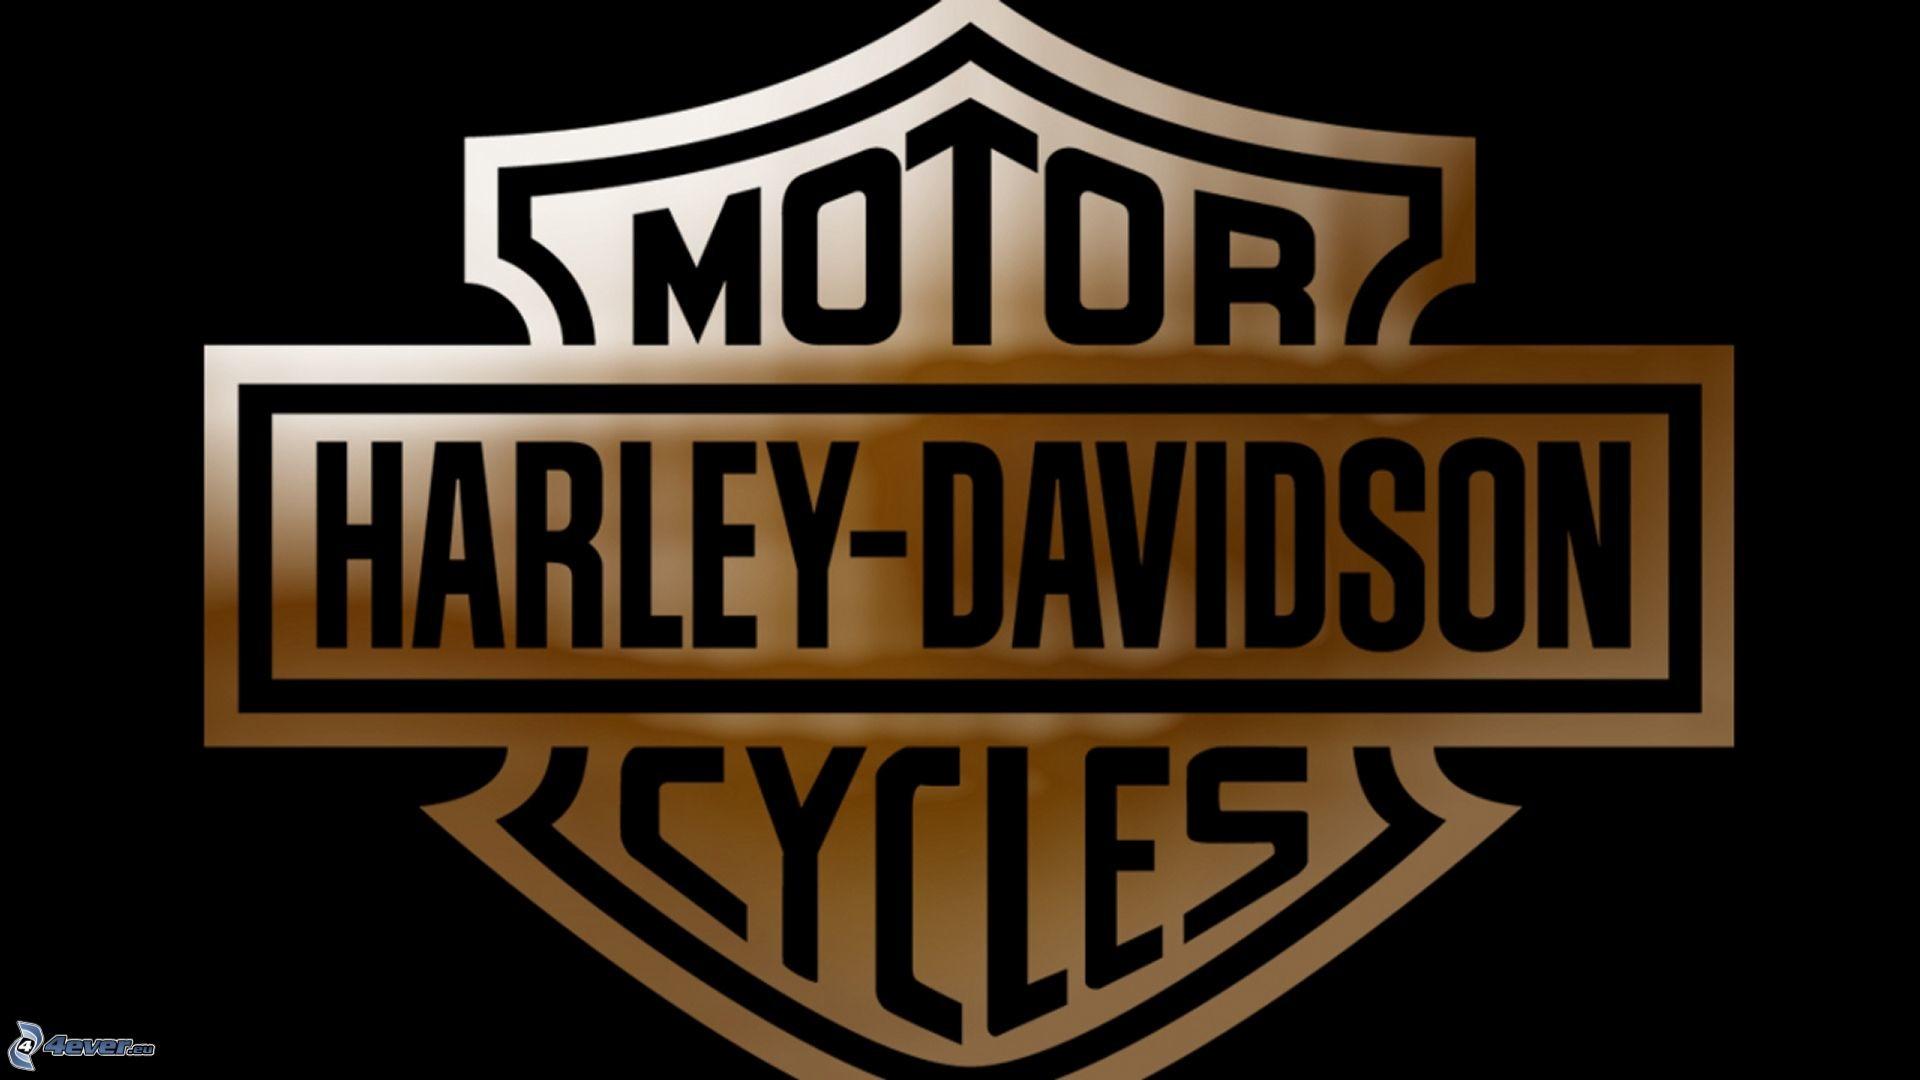 Harley Davidson Logo Wallpaper